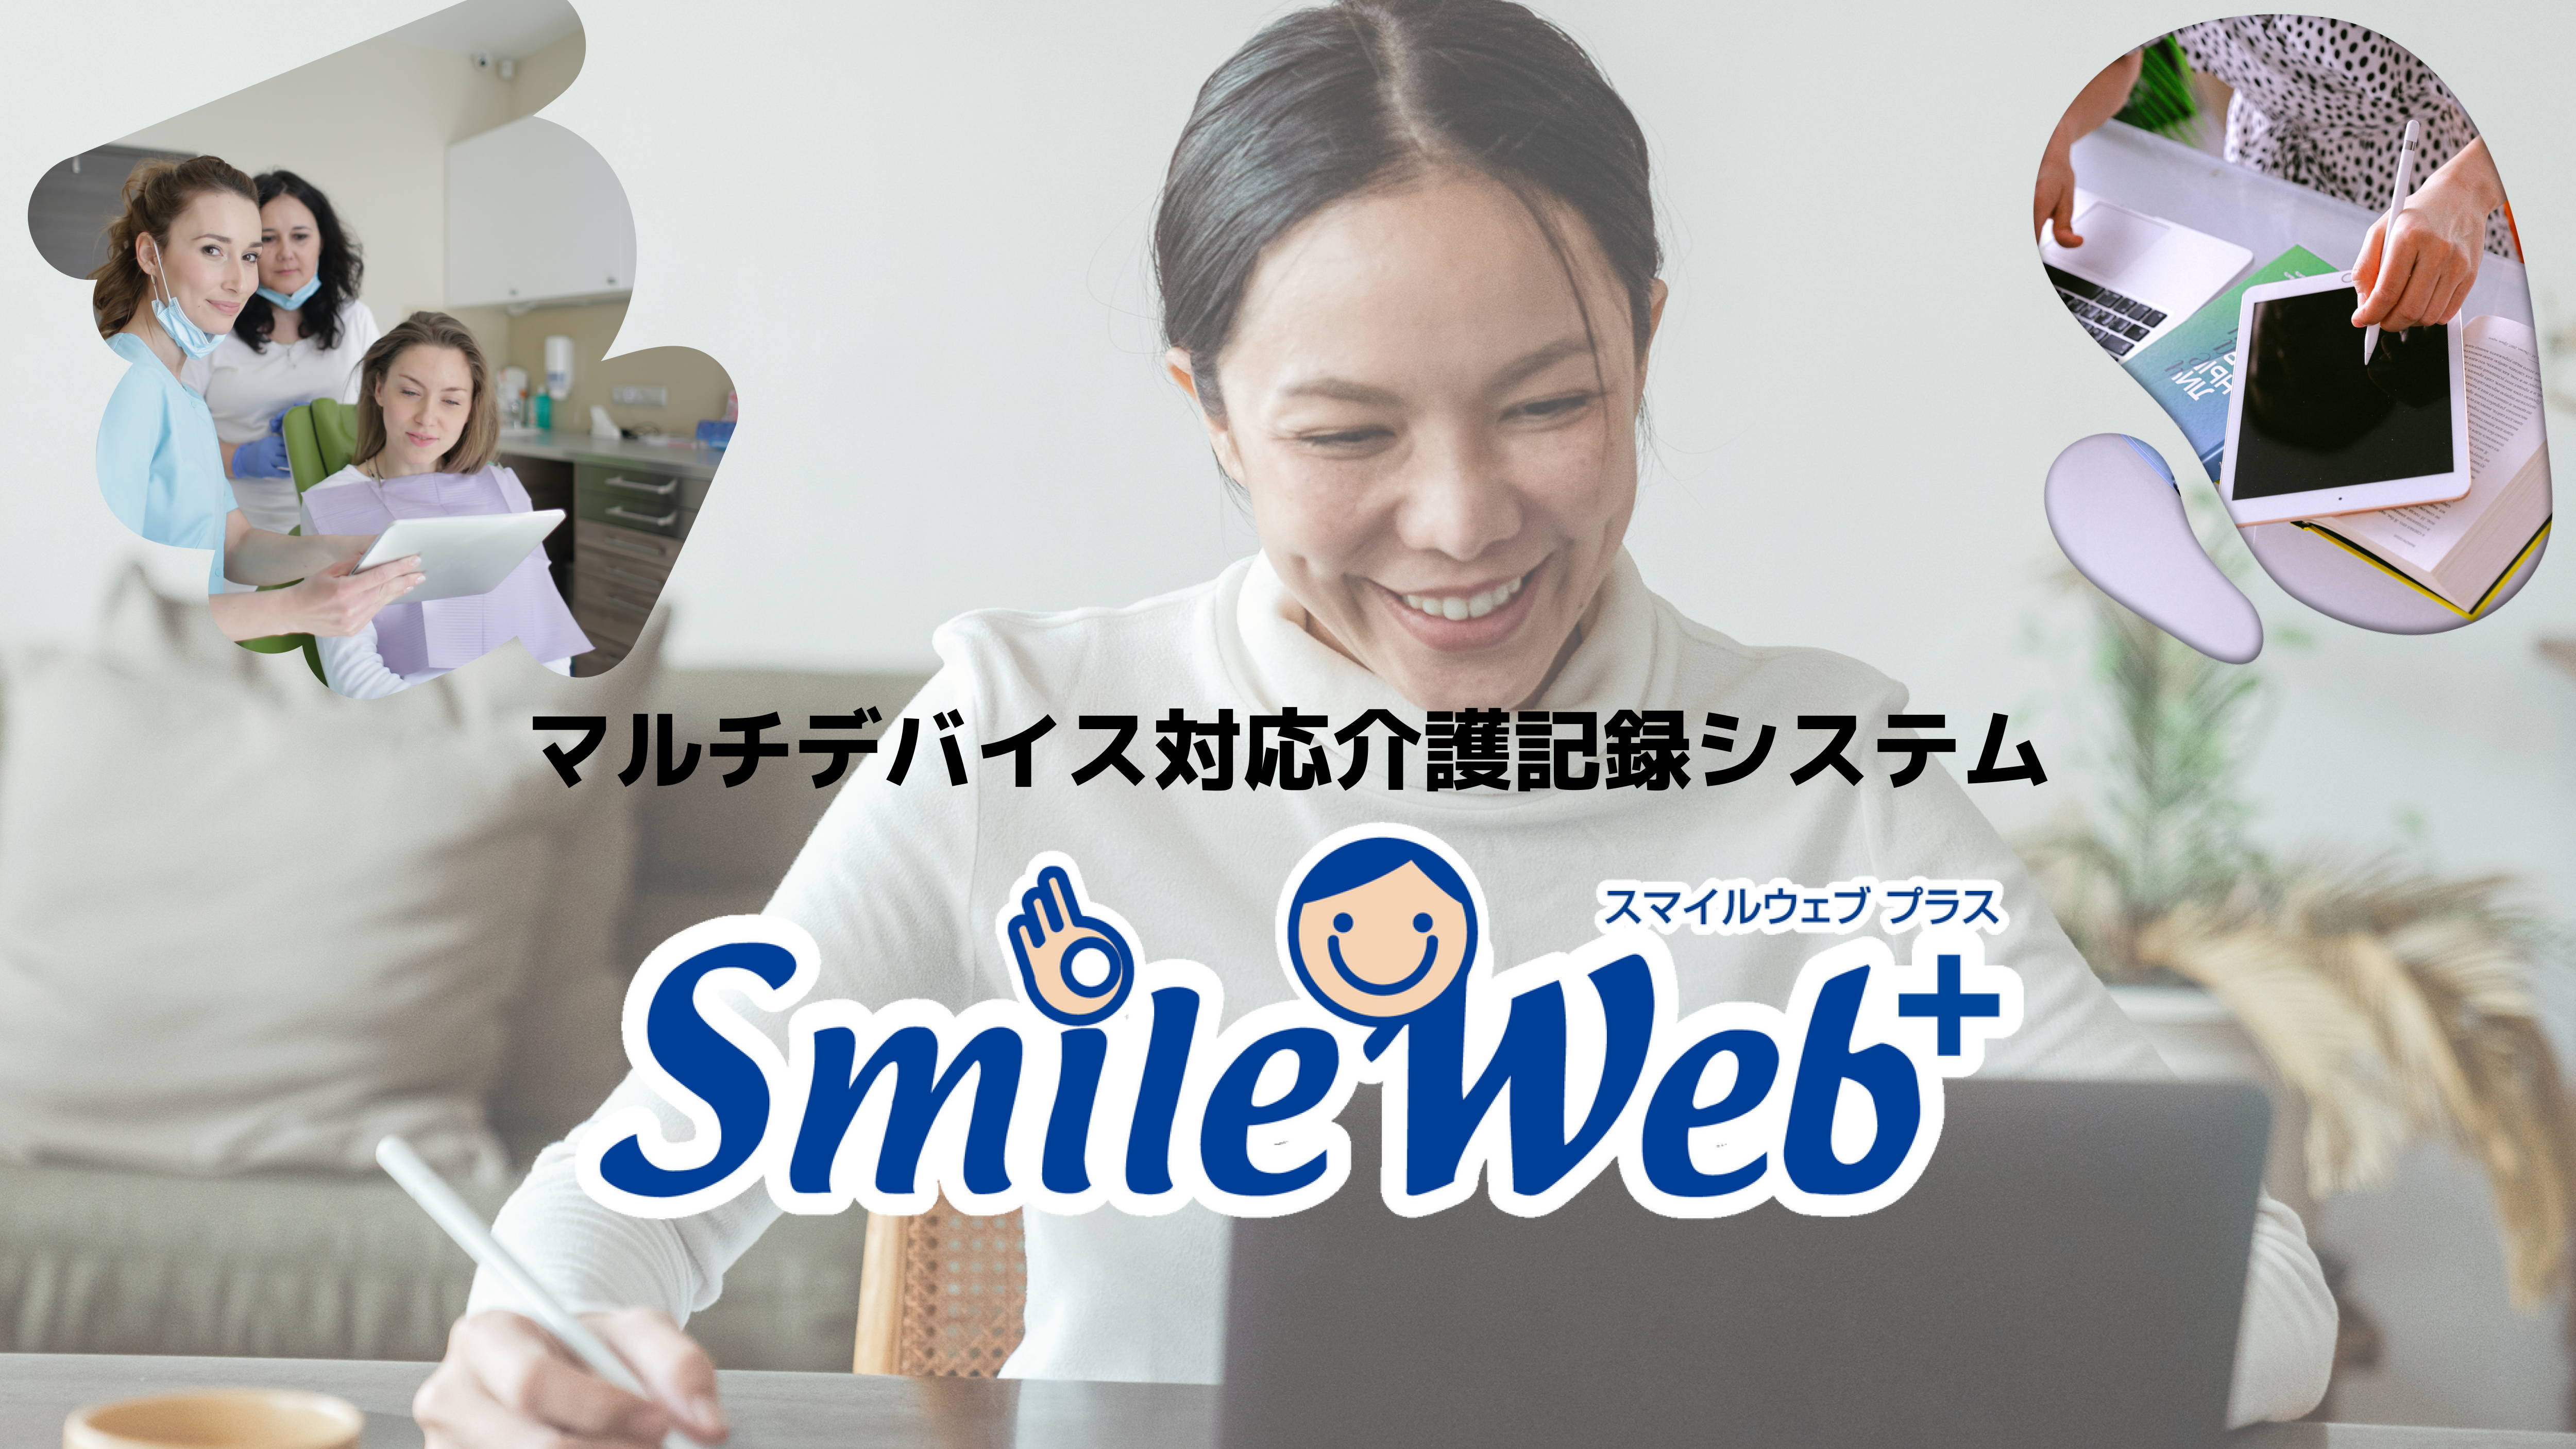 SmileWeb